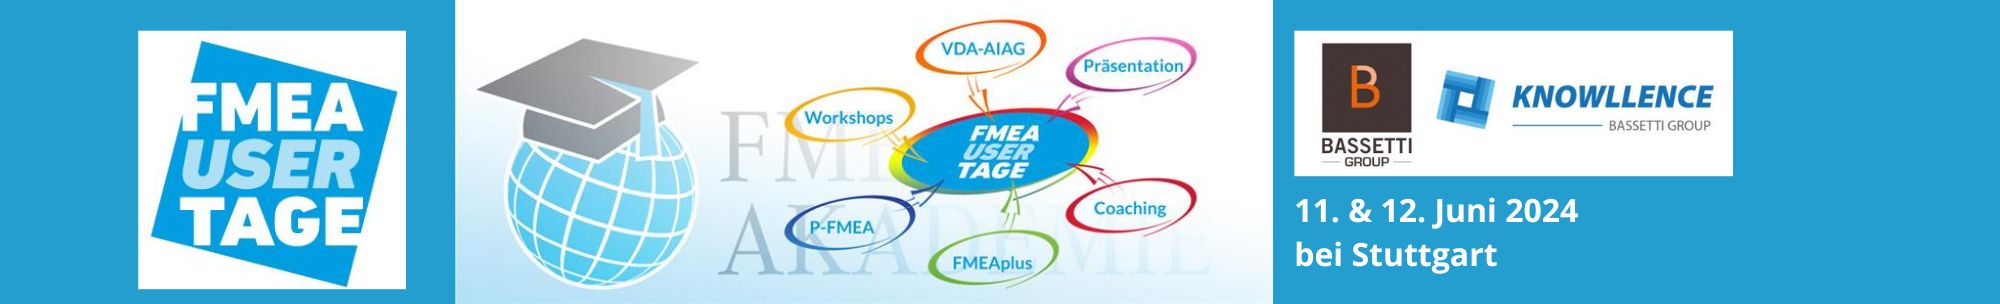 FMEA UserTage 2024